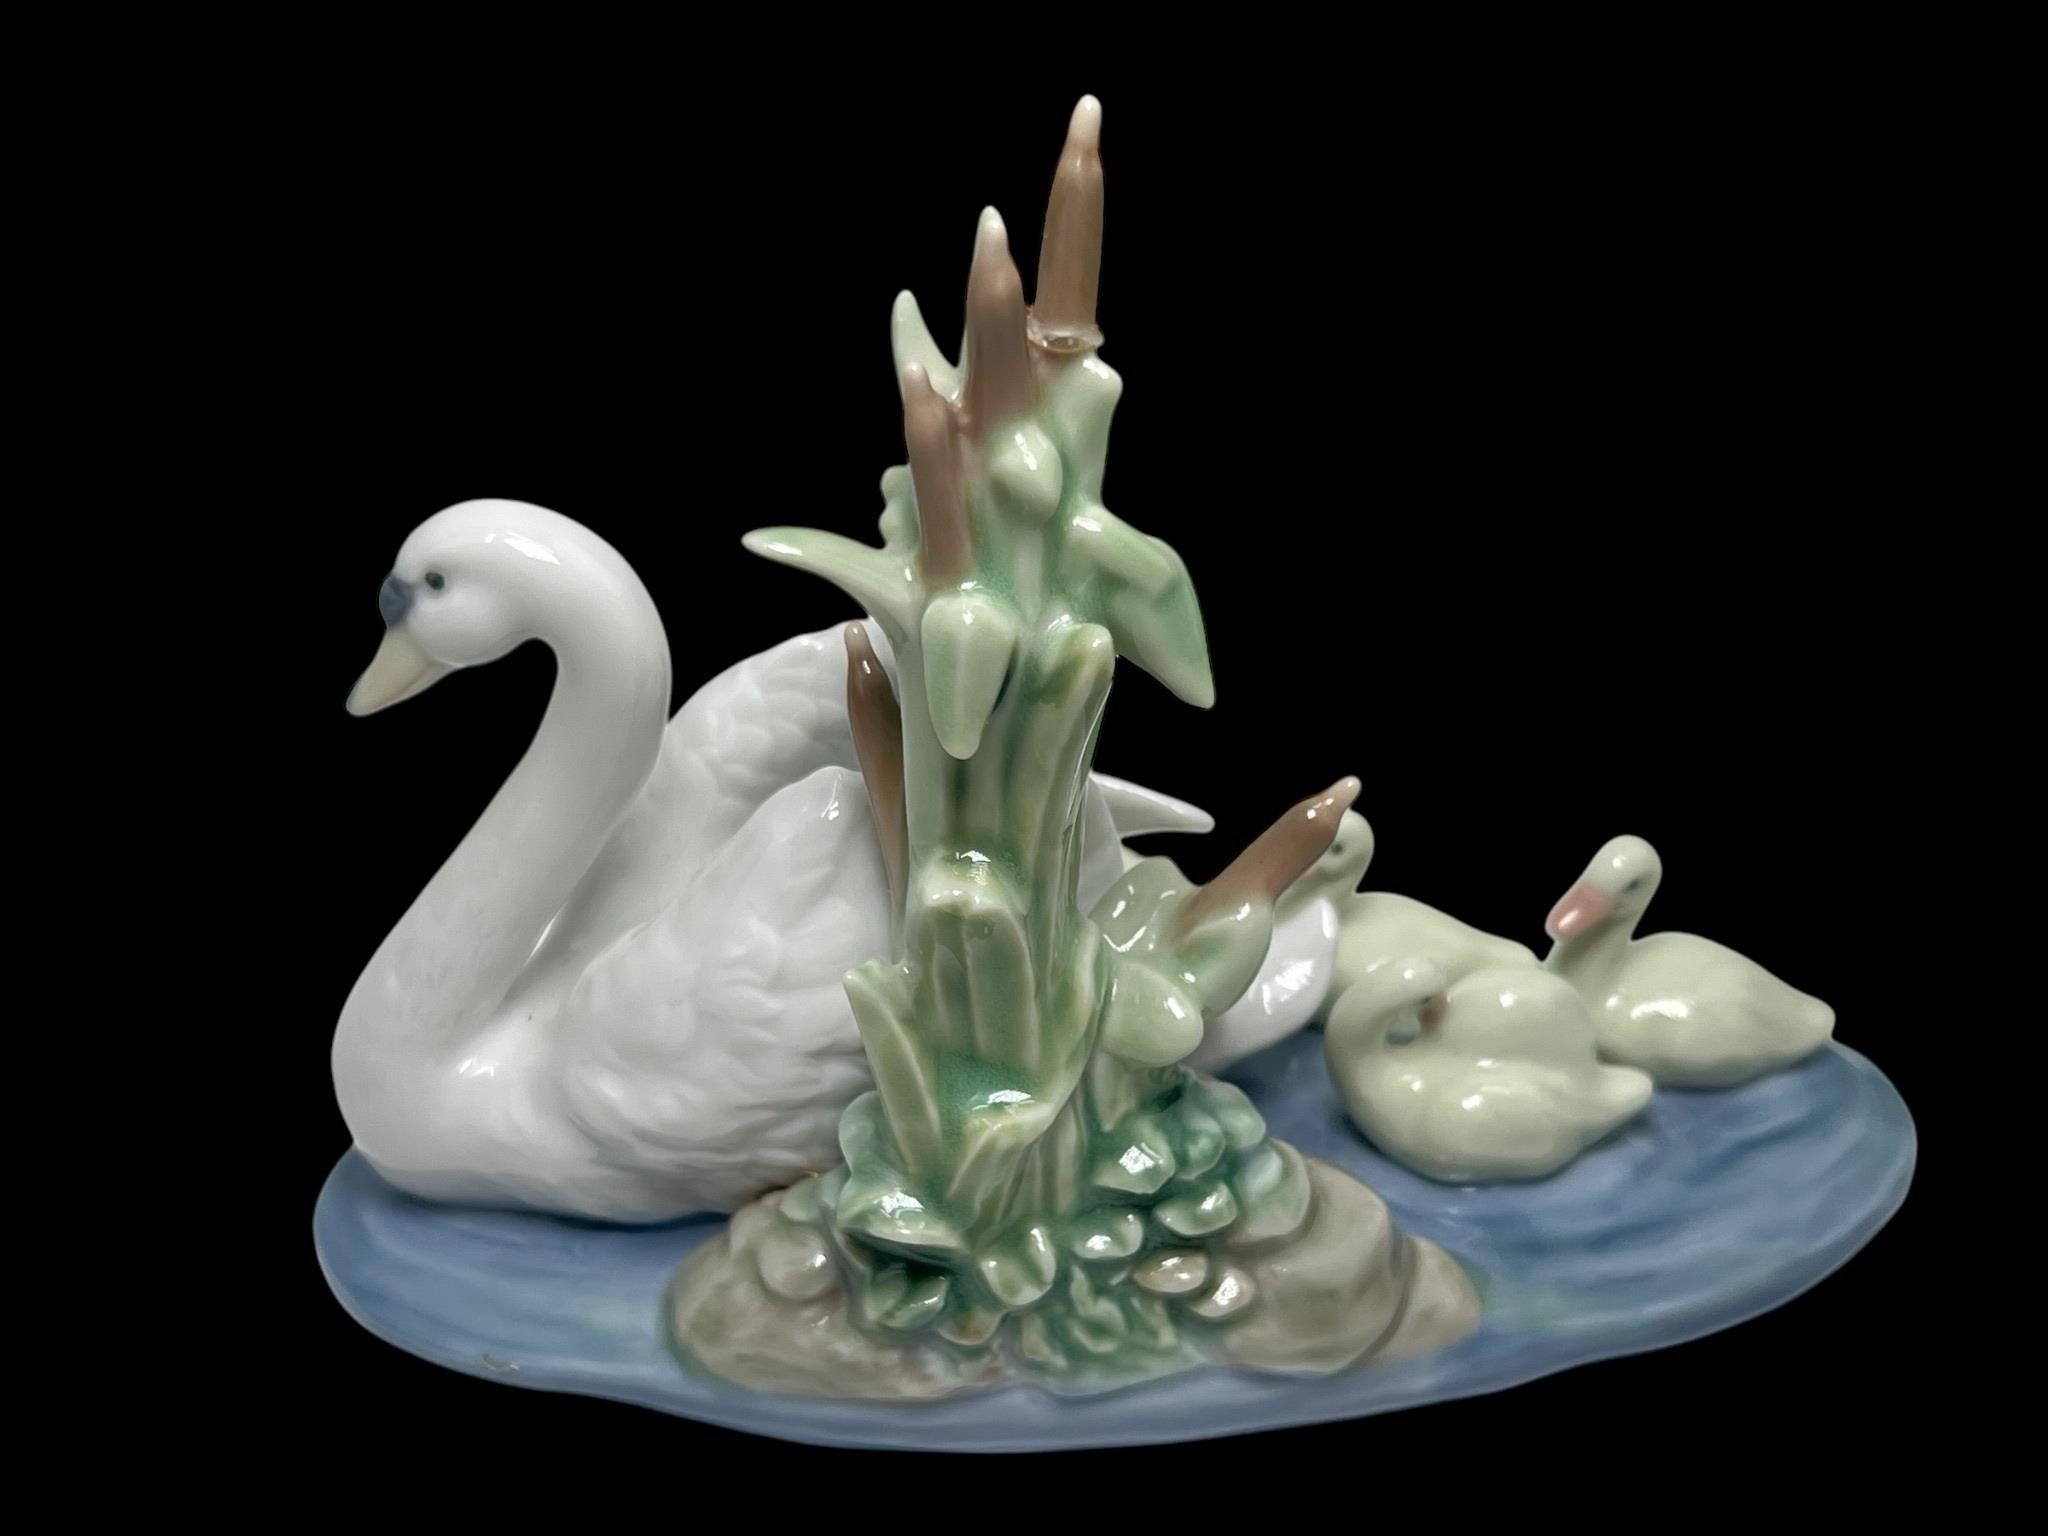 Lladro Porcelain Swan Figurine - 1989